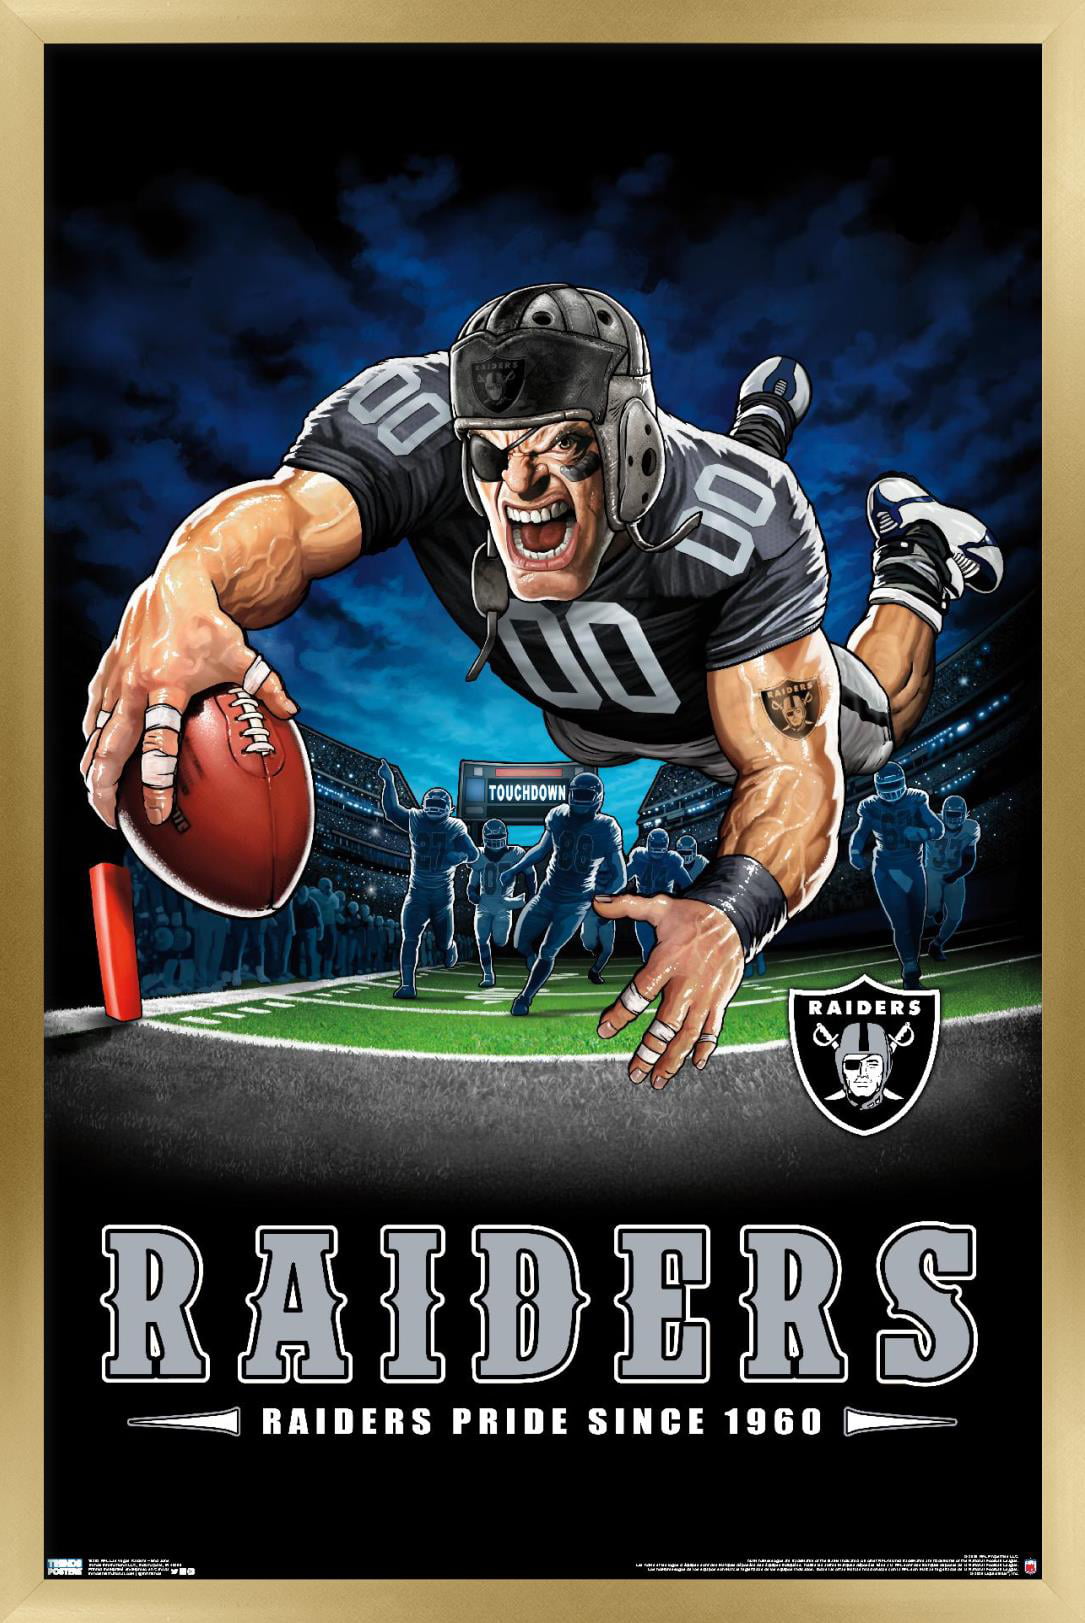 NFL Las Vegas Raiders – End Zone 20 Wall Poster, 14.725' x 22.375', Framed